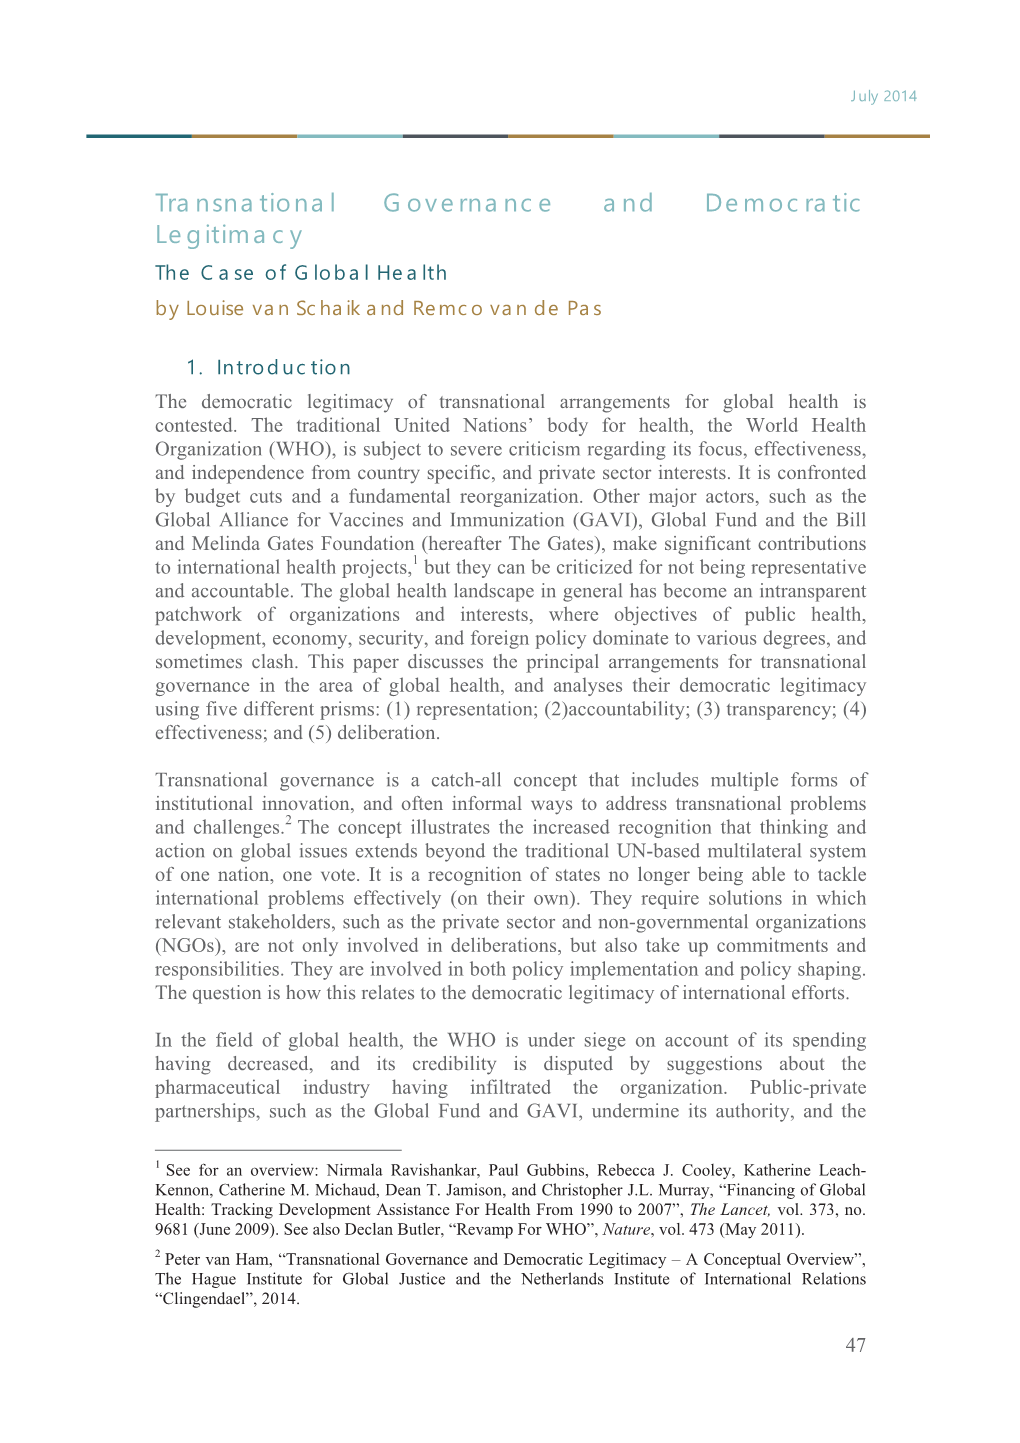 Transnational Governance and Democratic Legitimacy the Case of Global Health by Louise Van Schaik and Remco Van De Pas